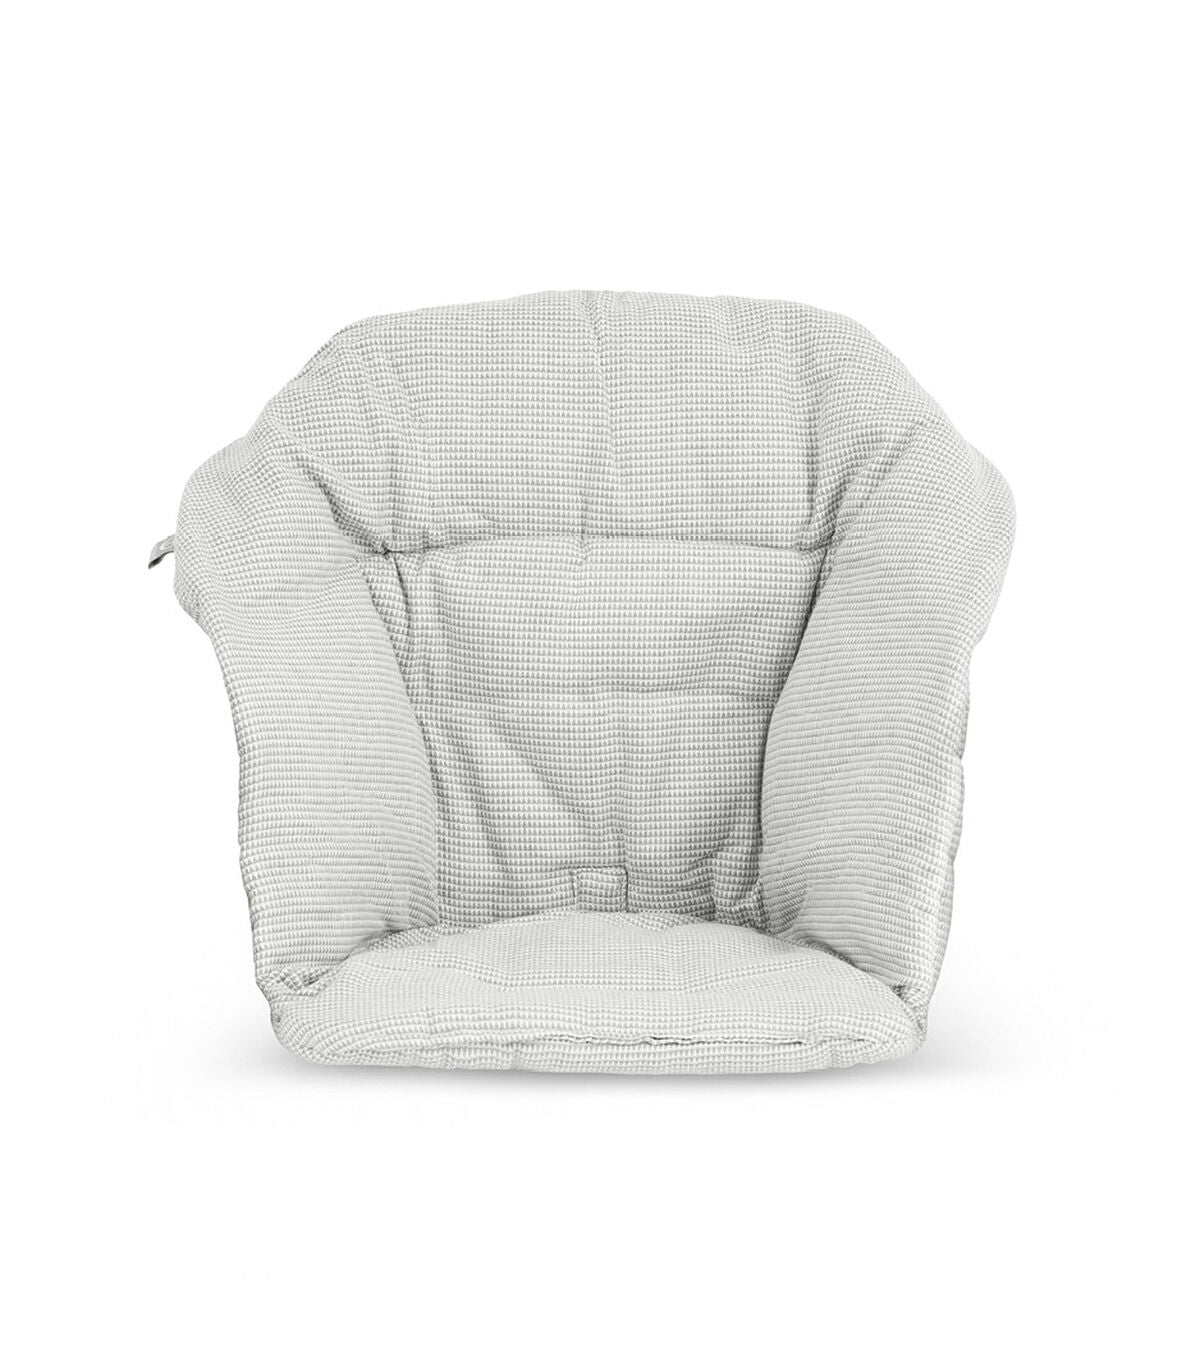 Stokke® Clikk™ Cushion